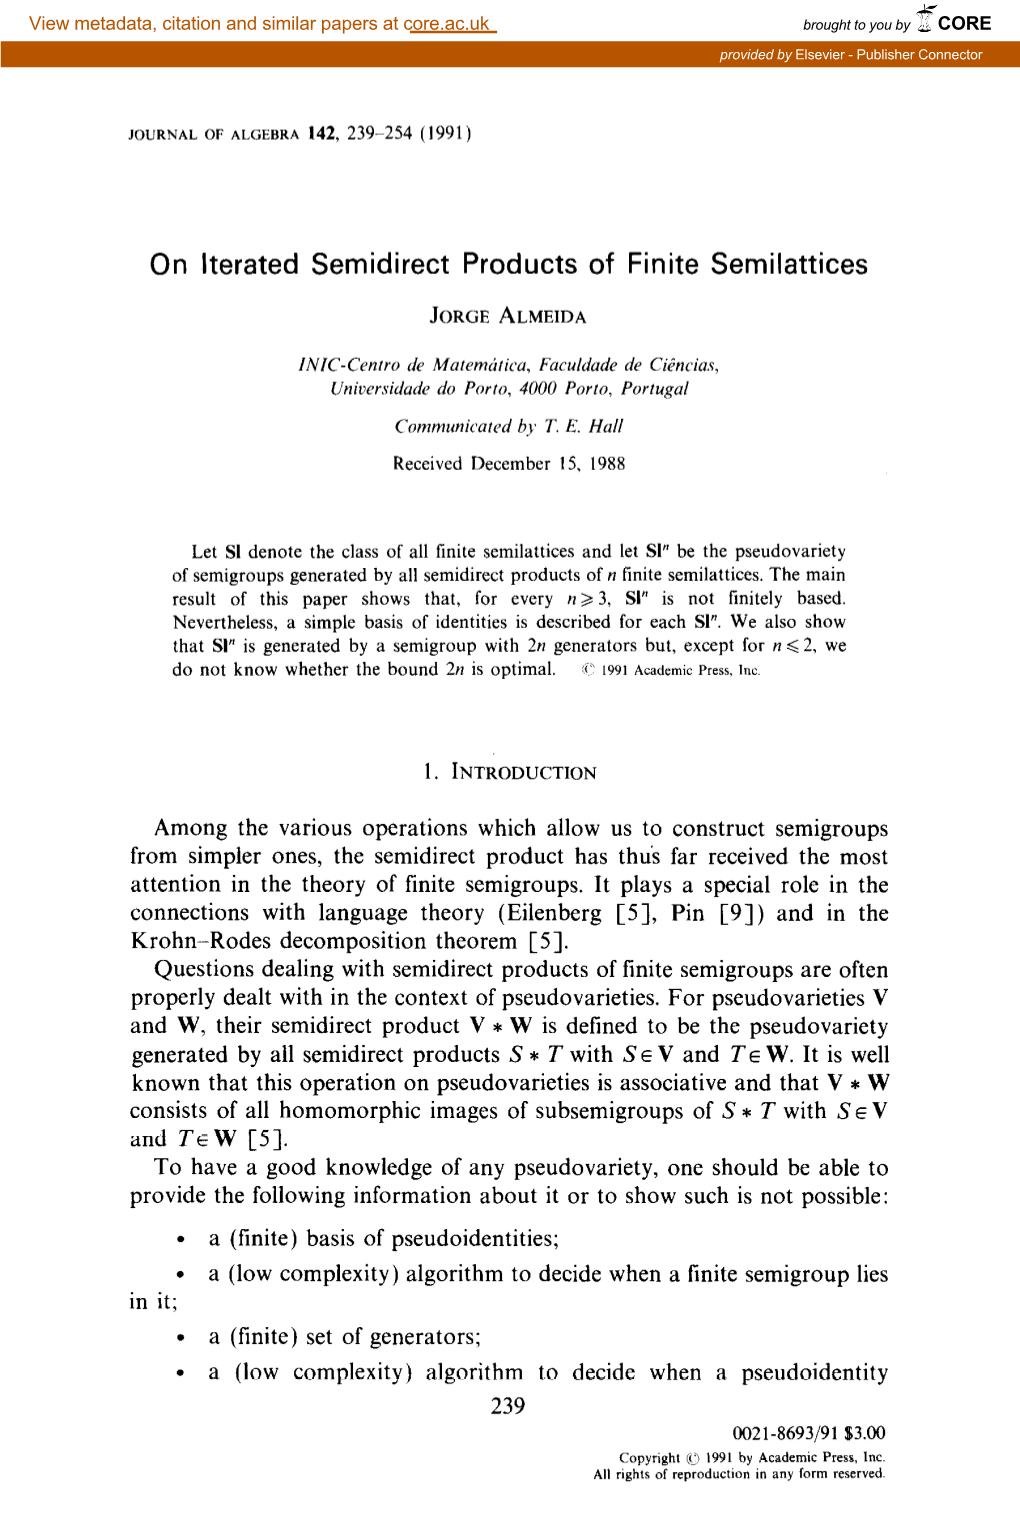 On Iterated Semidirect Products of Finite Semilattices